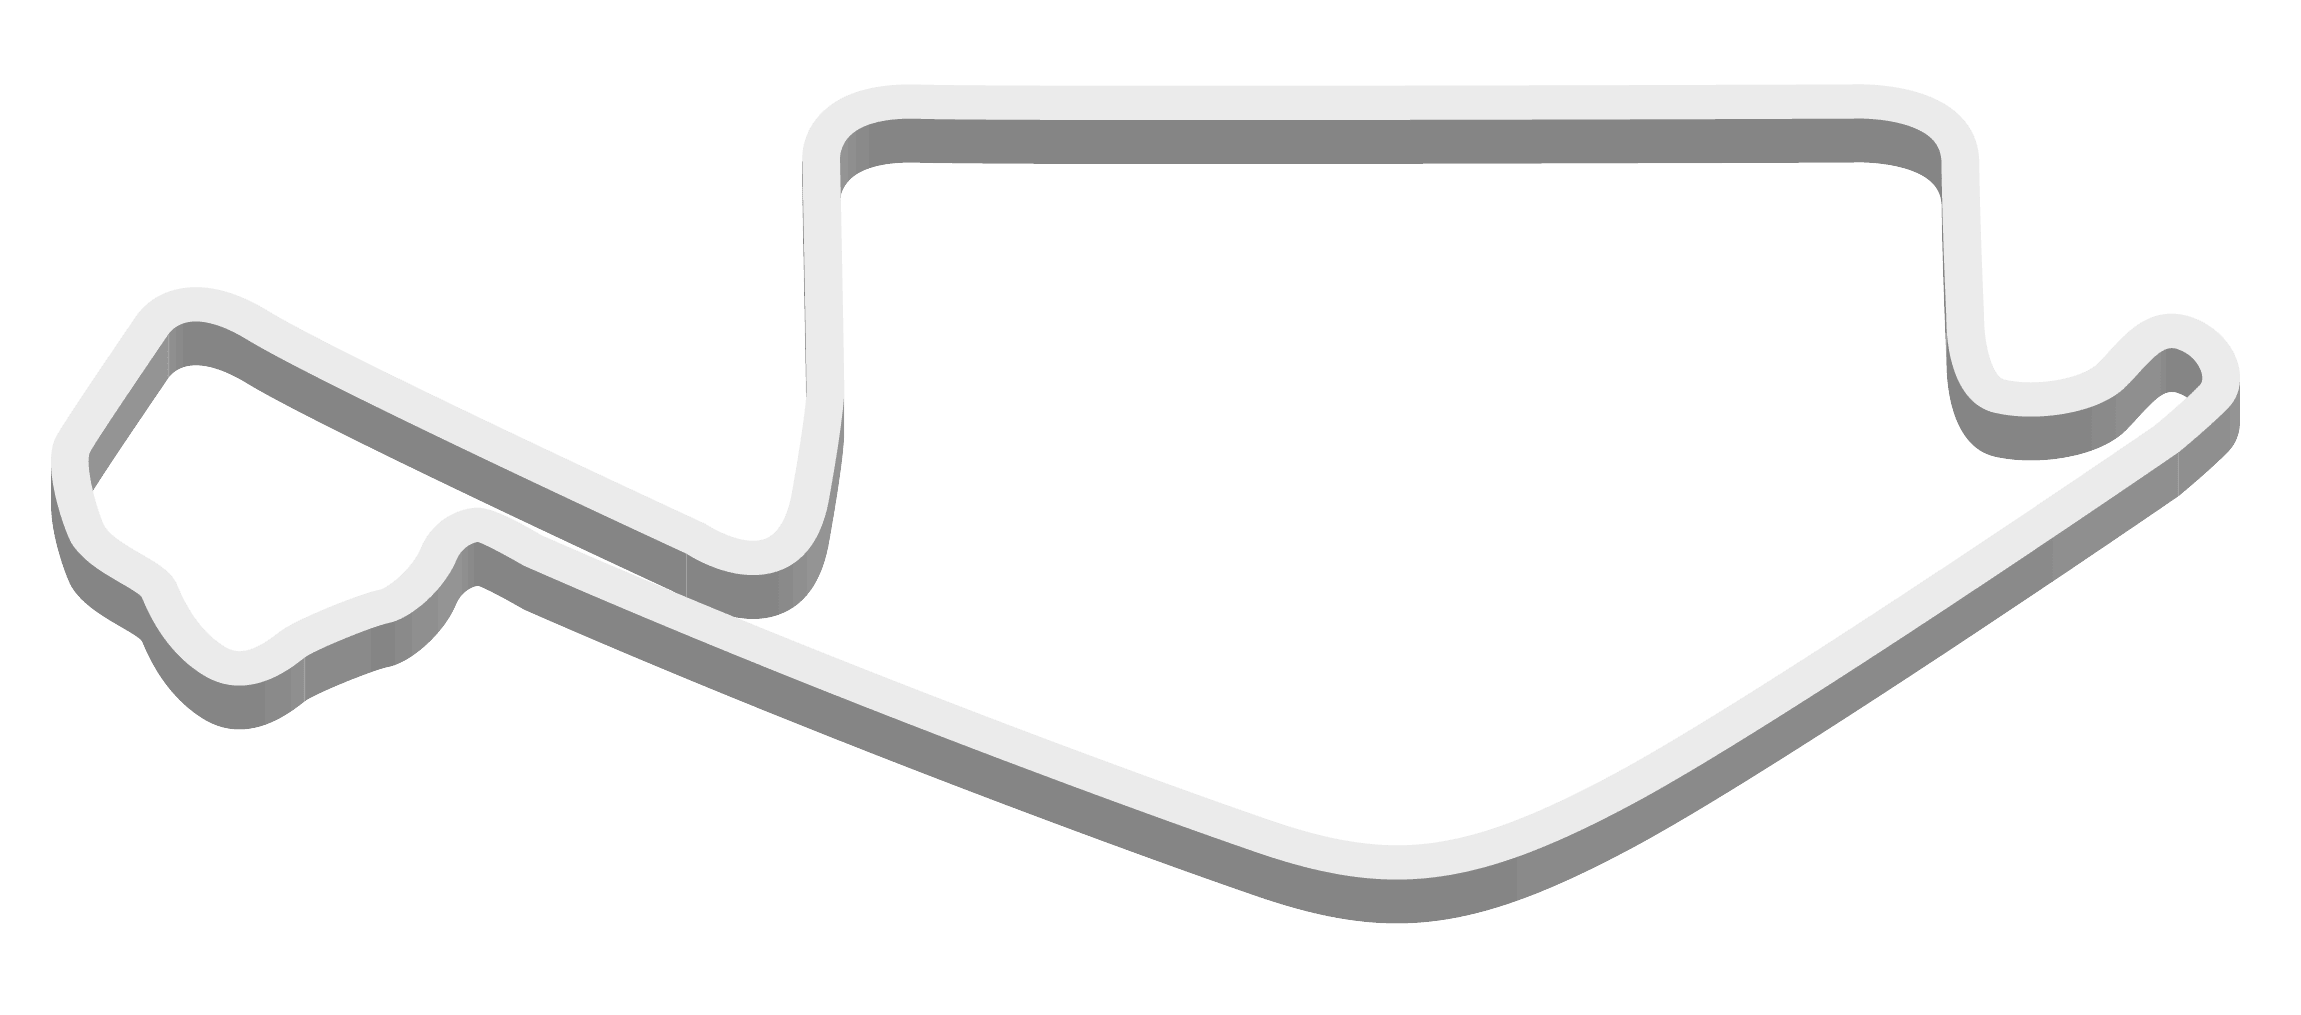 Grand Prix Long Beach - Racetrack Image